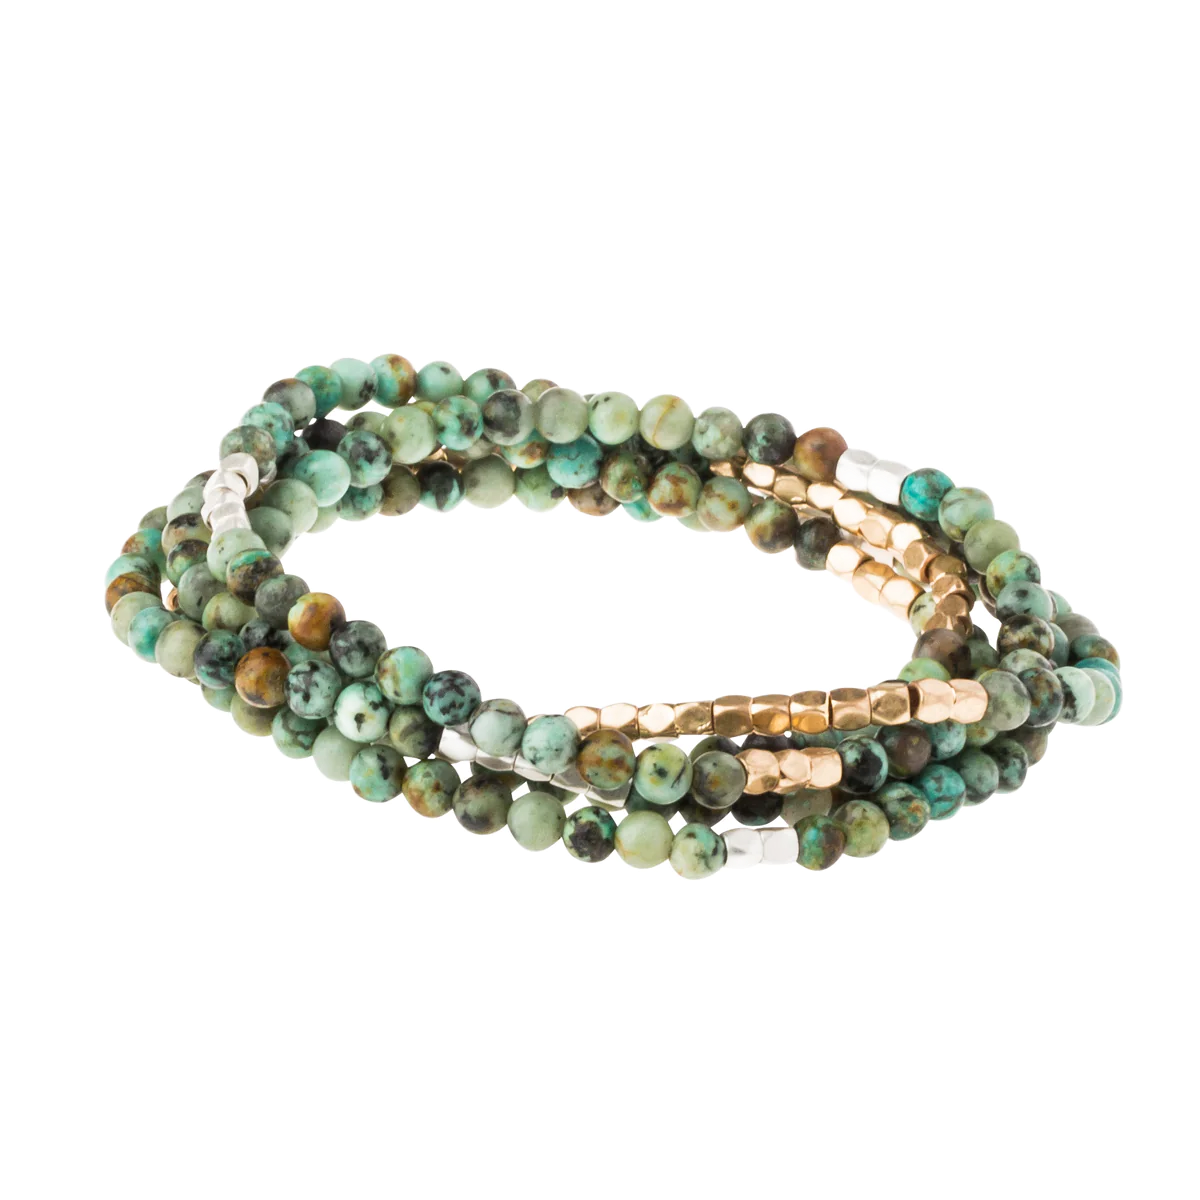 Stone Wrap Bracelet/Necklace - African Turquoise